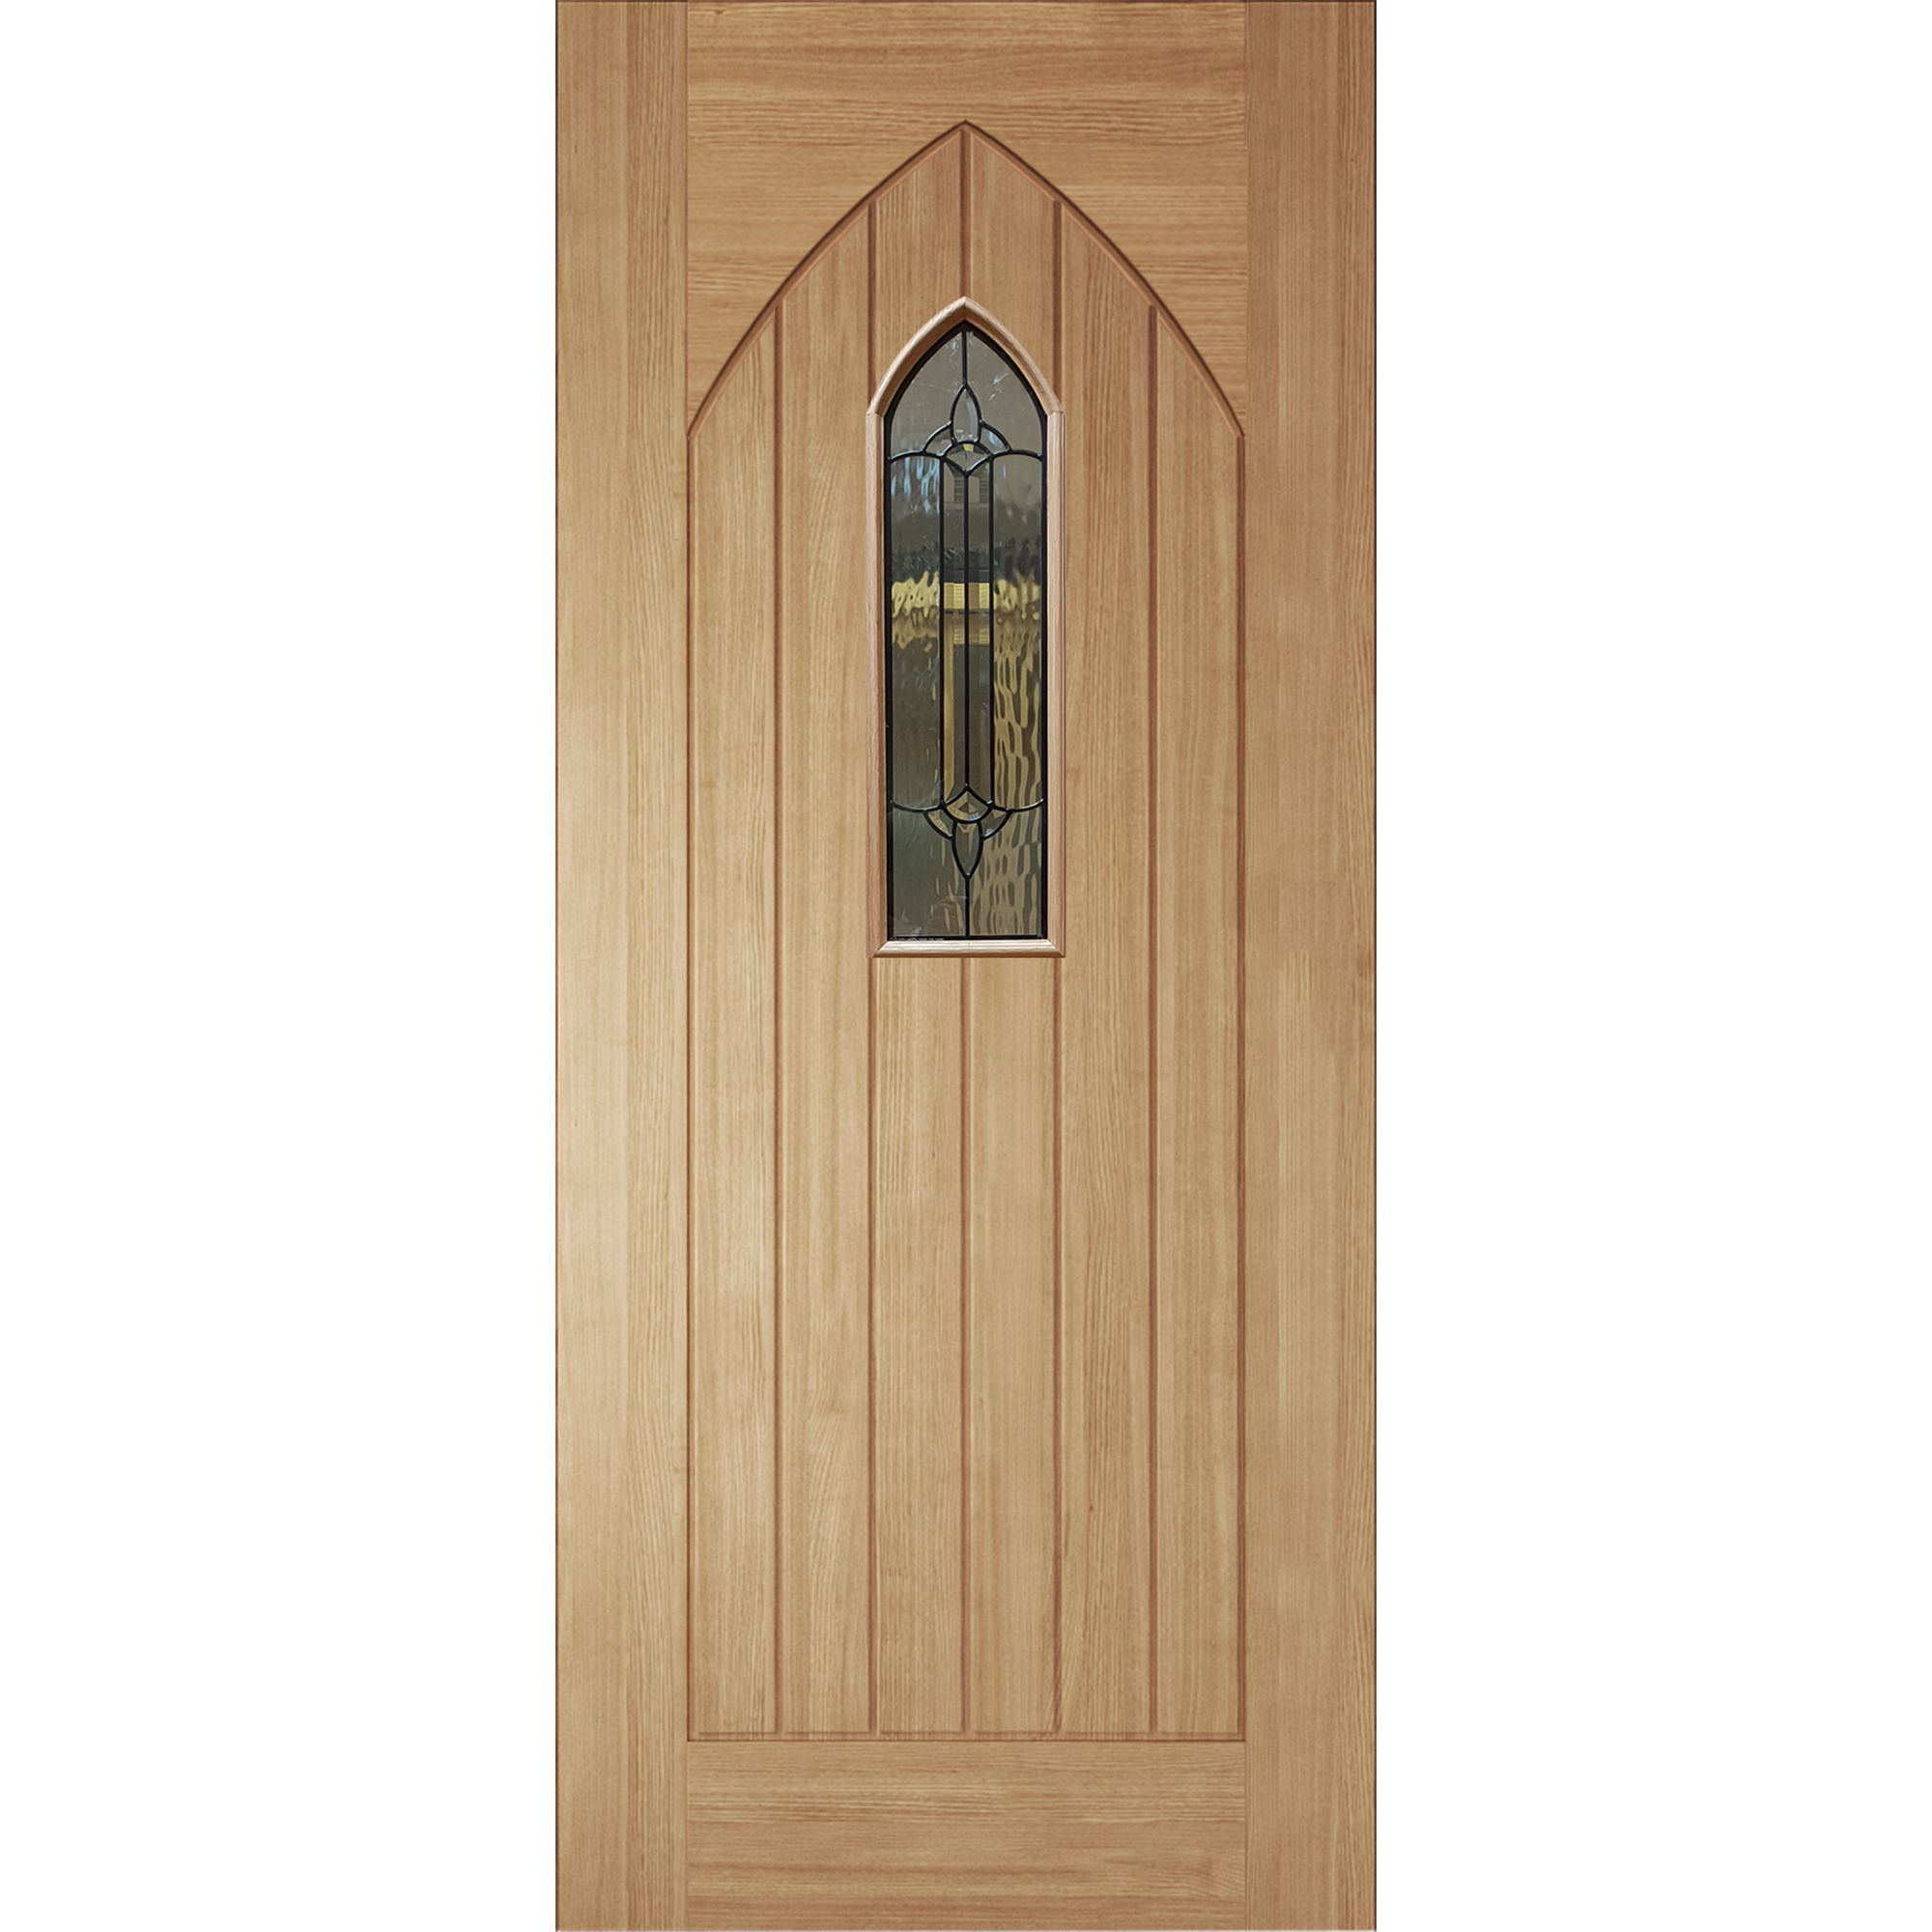 Westminster 6 panel Leaded White oak veneer Swinging External Front Door, (H)1981mm (W)762mm